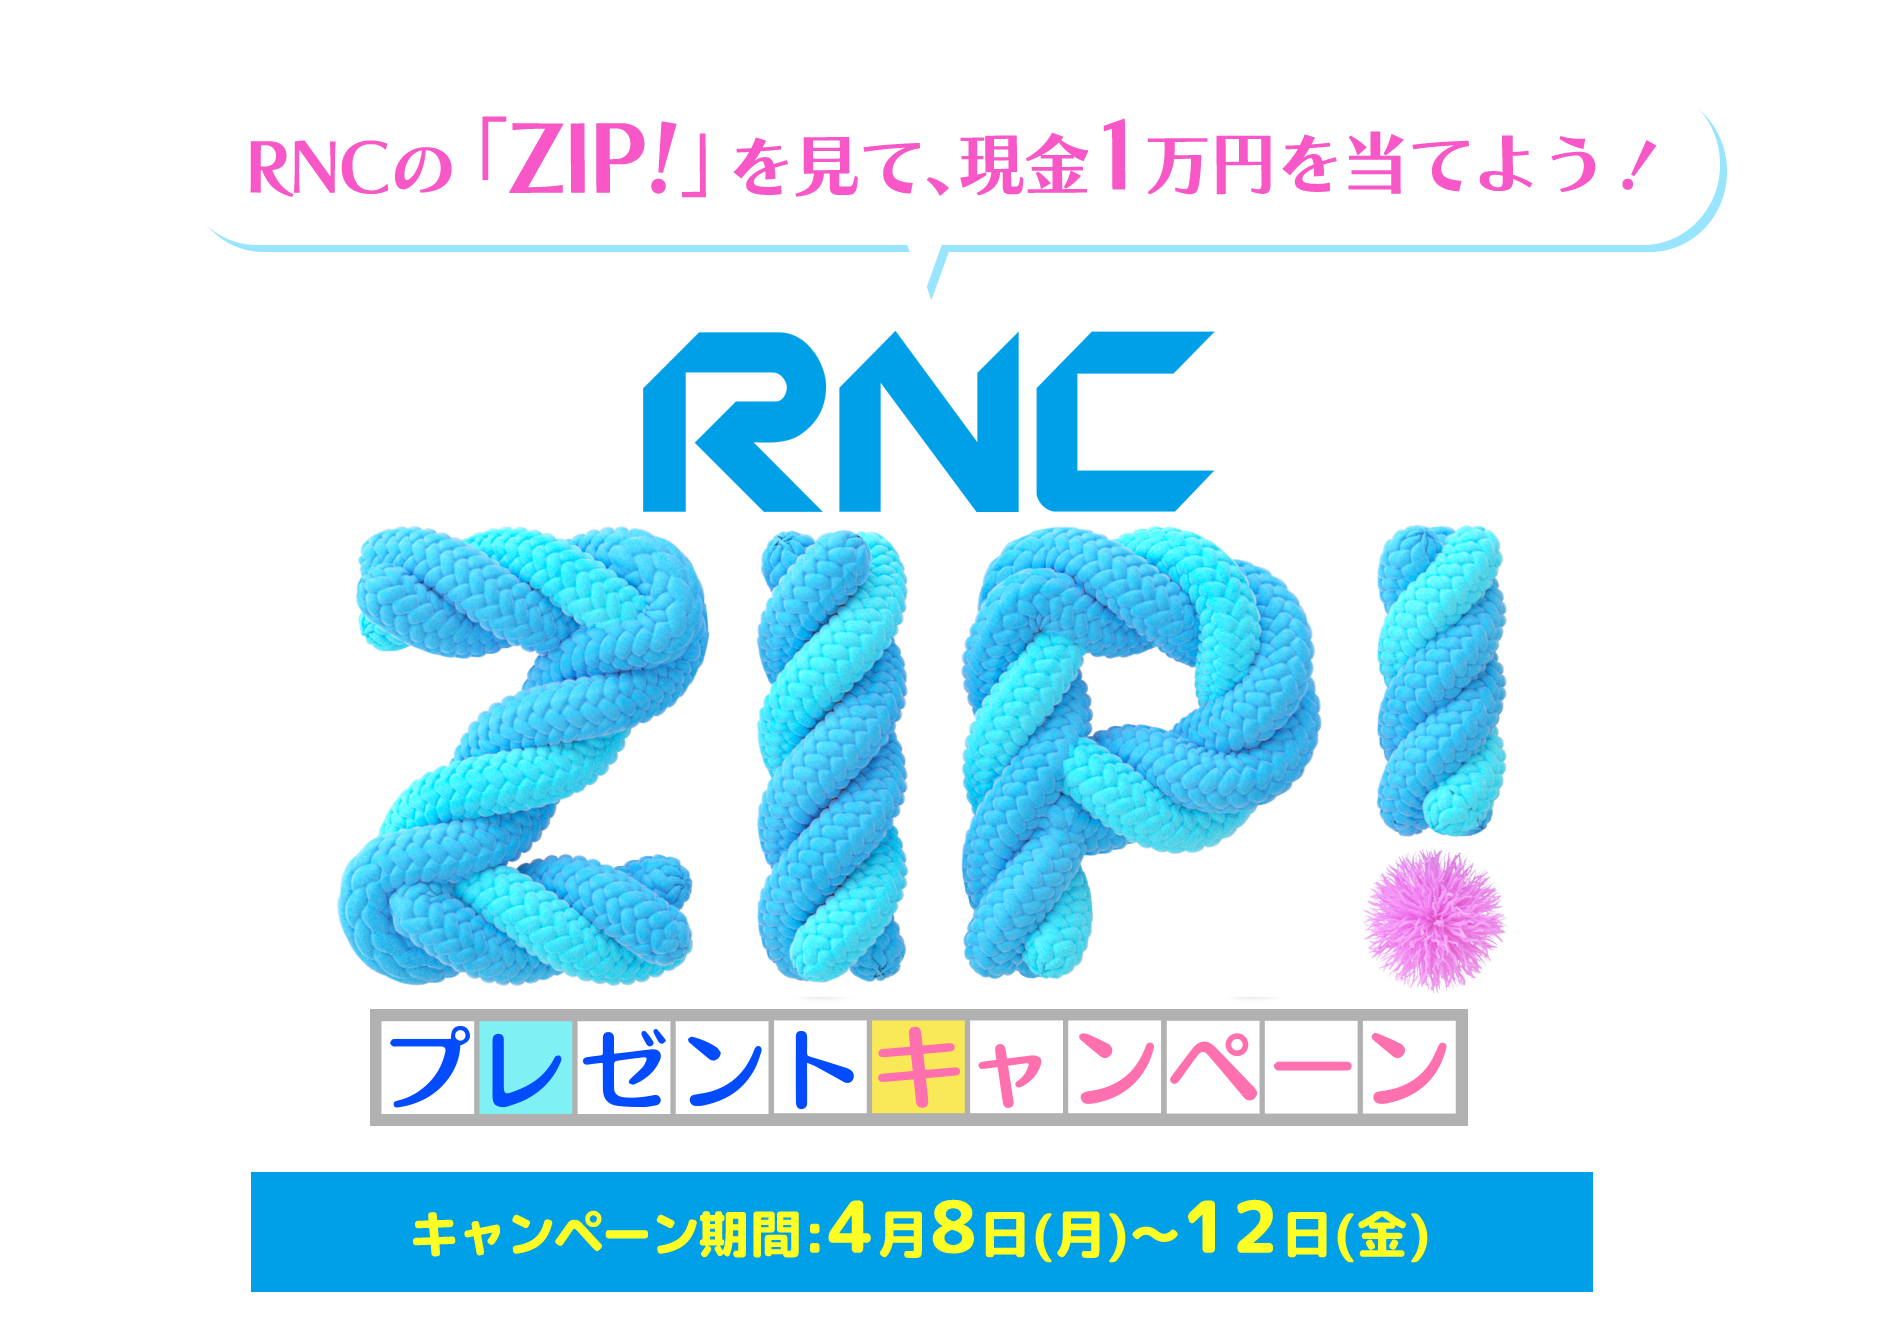 RNC ZIP！プレゼントキャンペーン